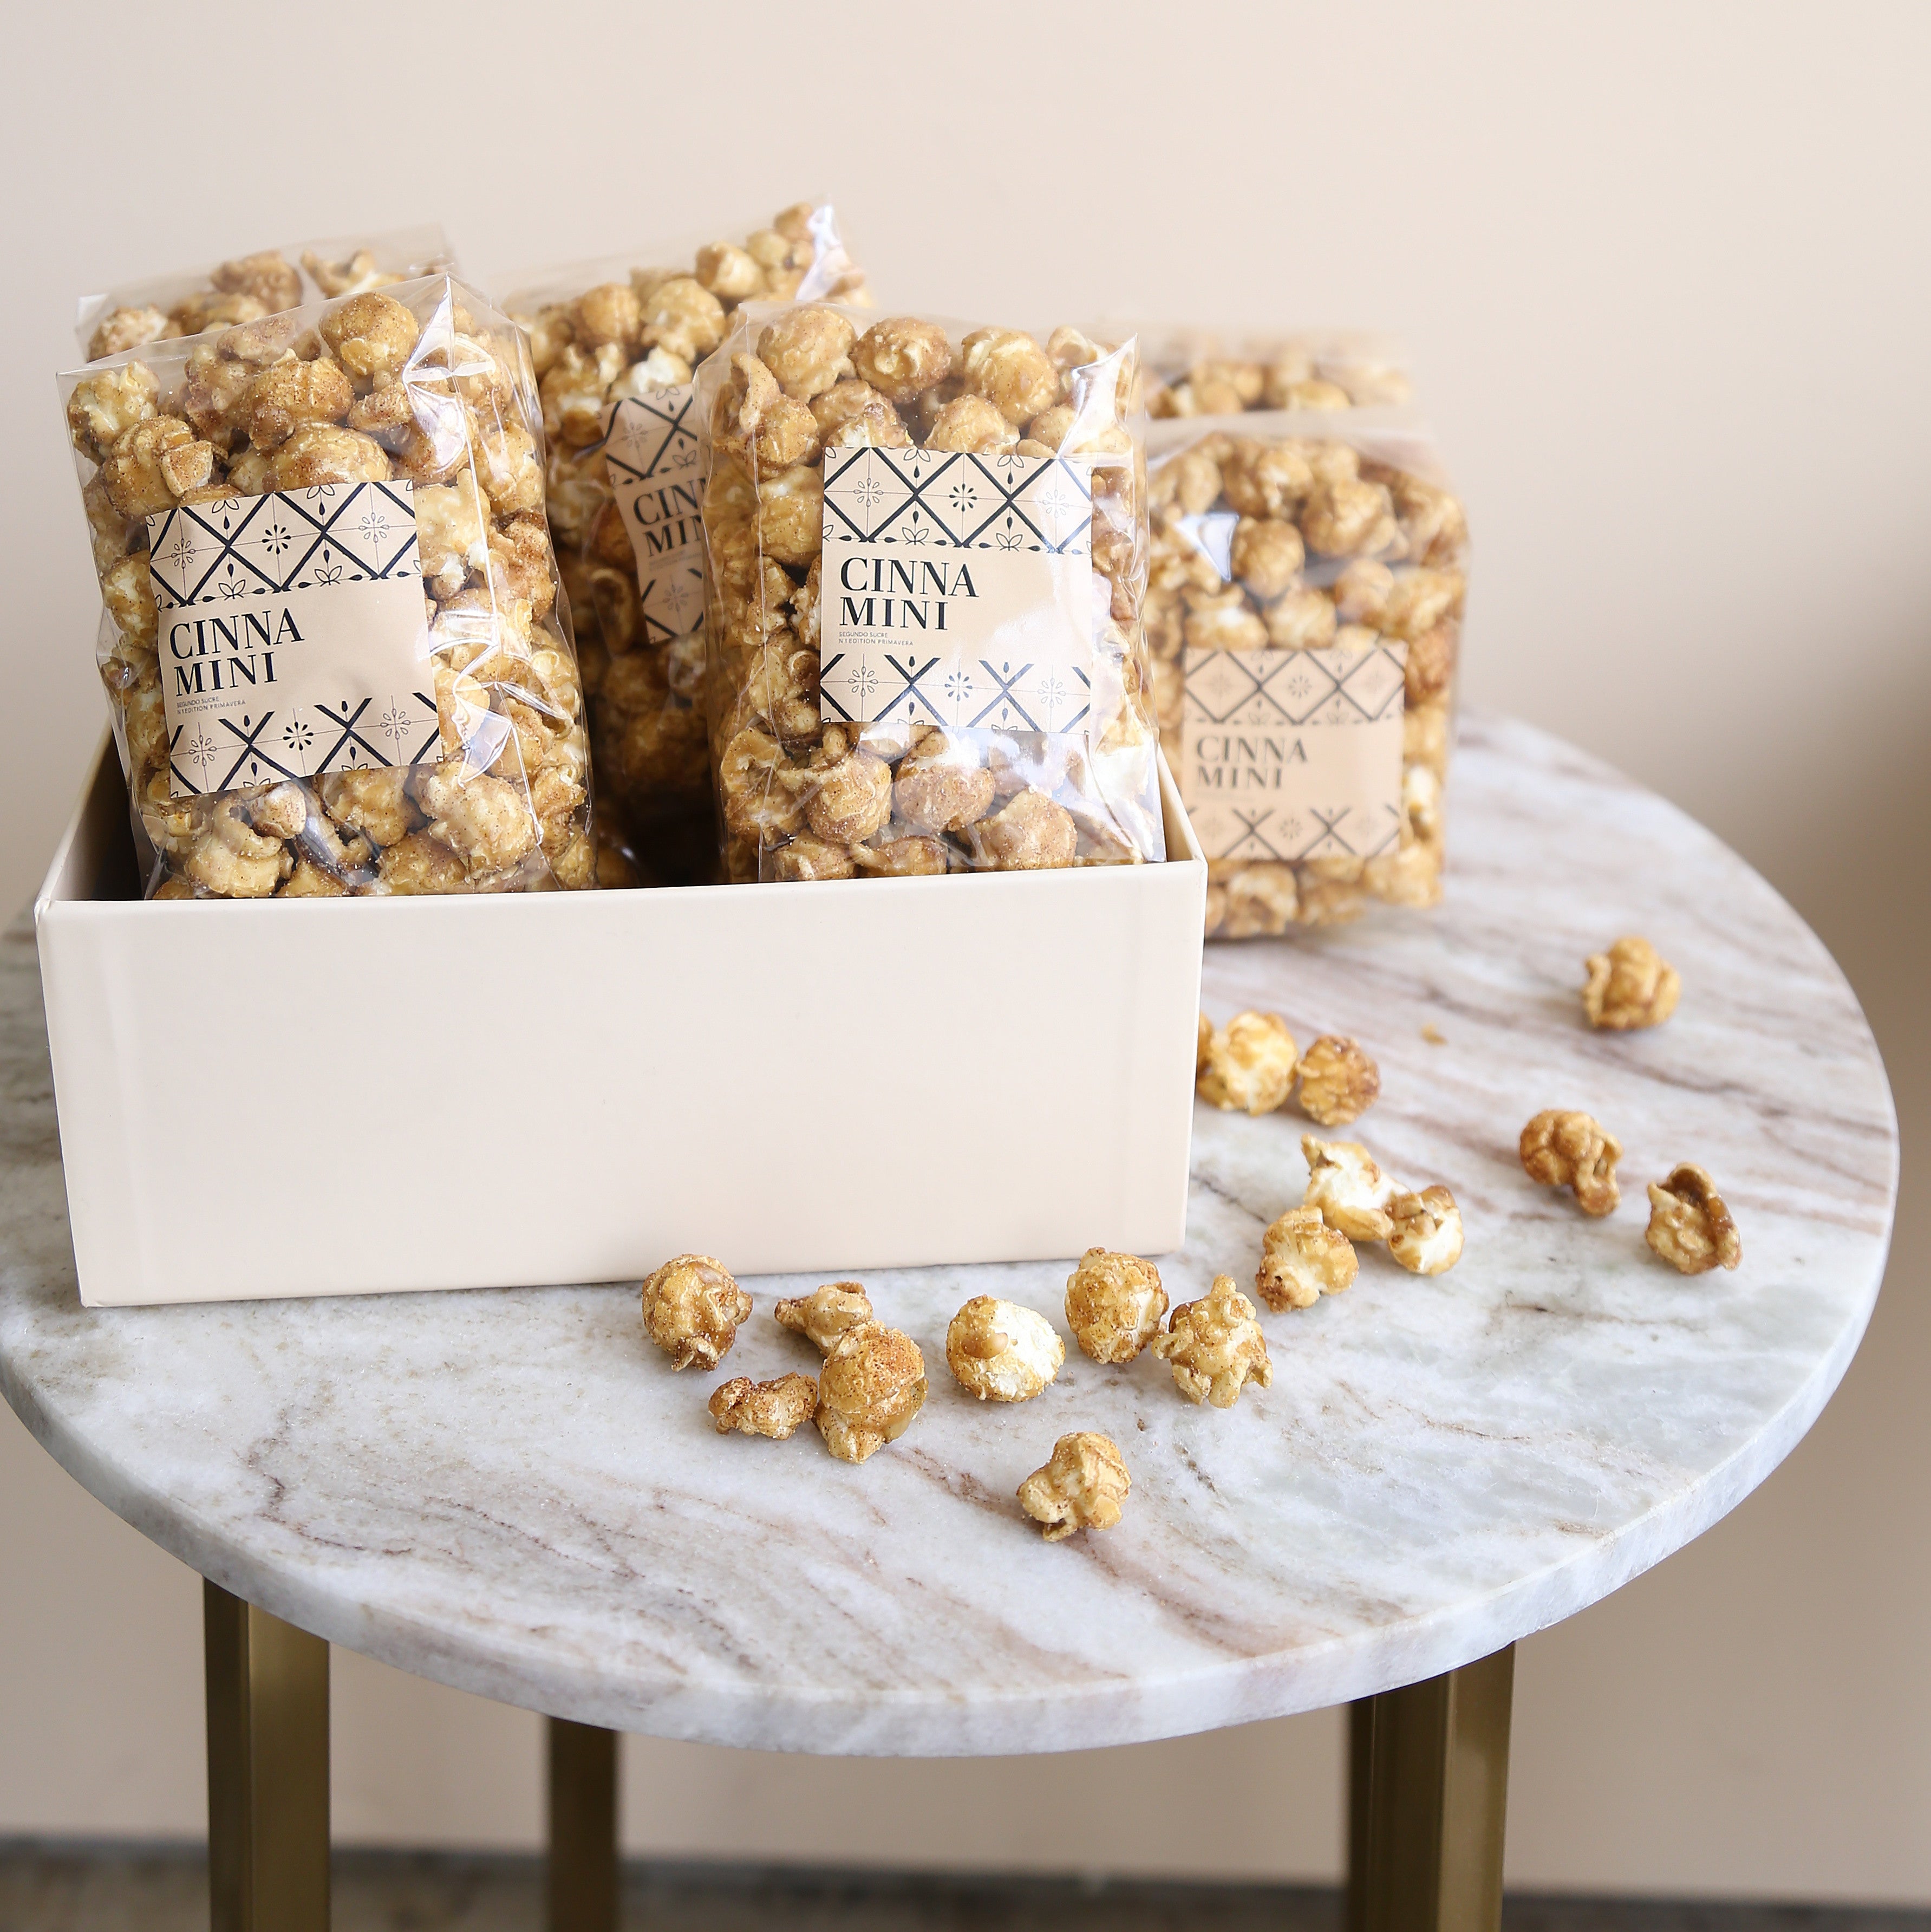 Welcome to BOXFOX // Cinnamini Churro Flavored Popcorn